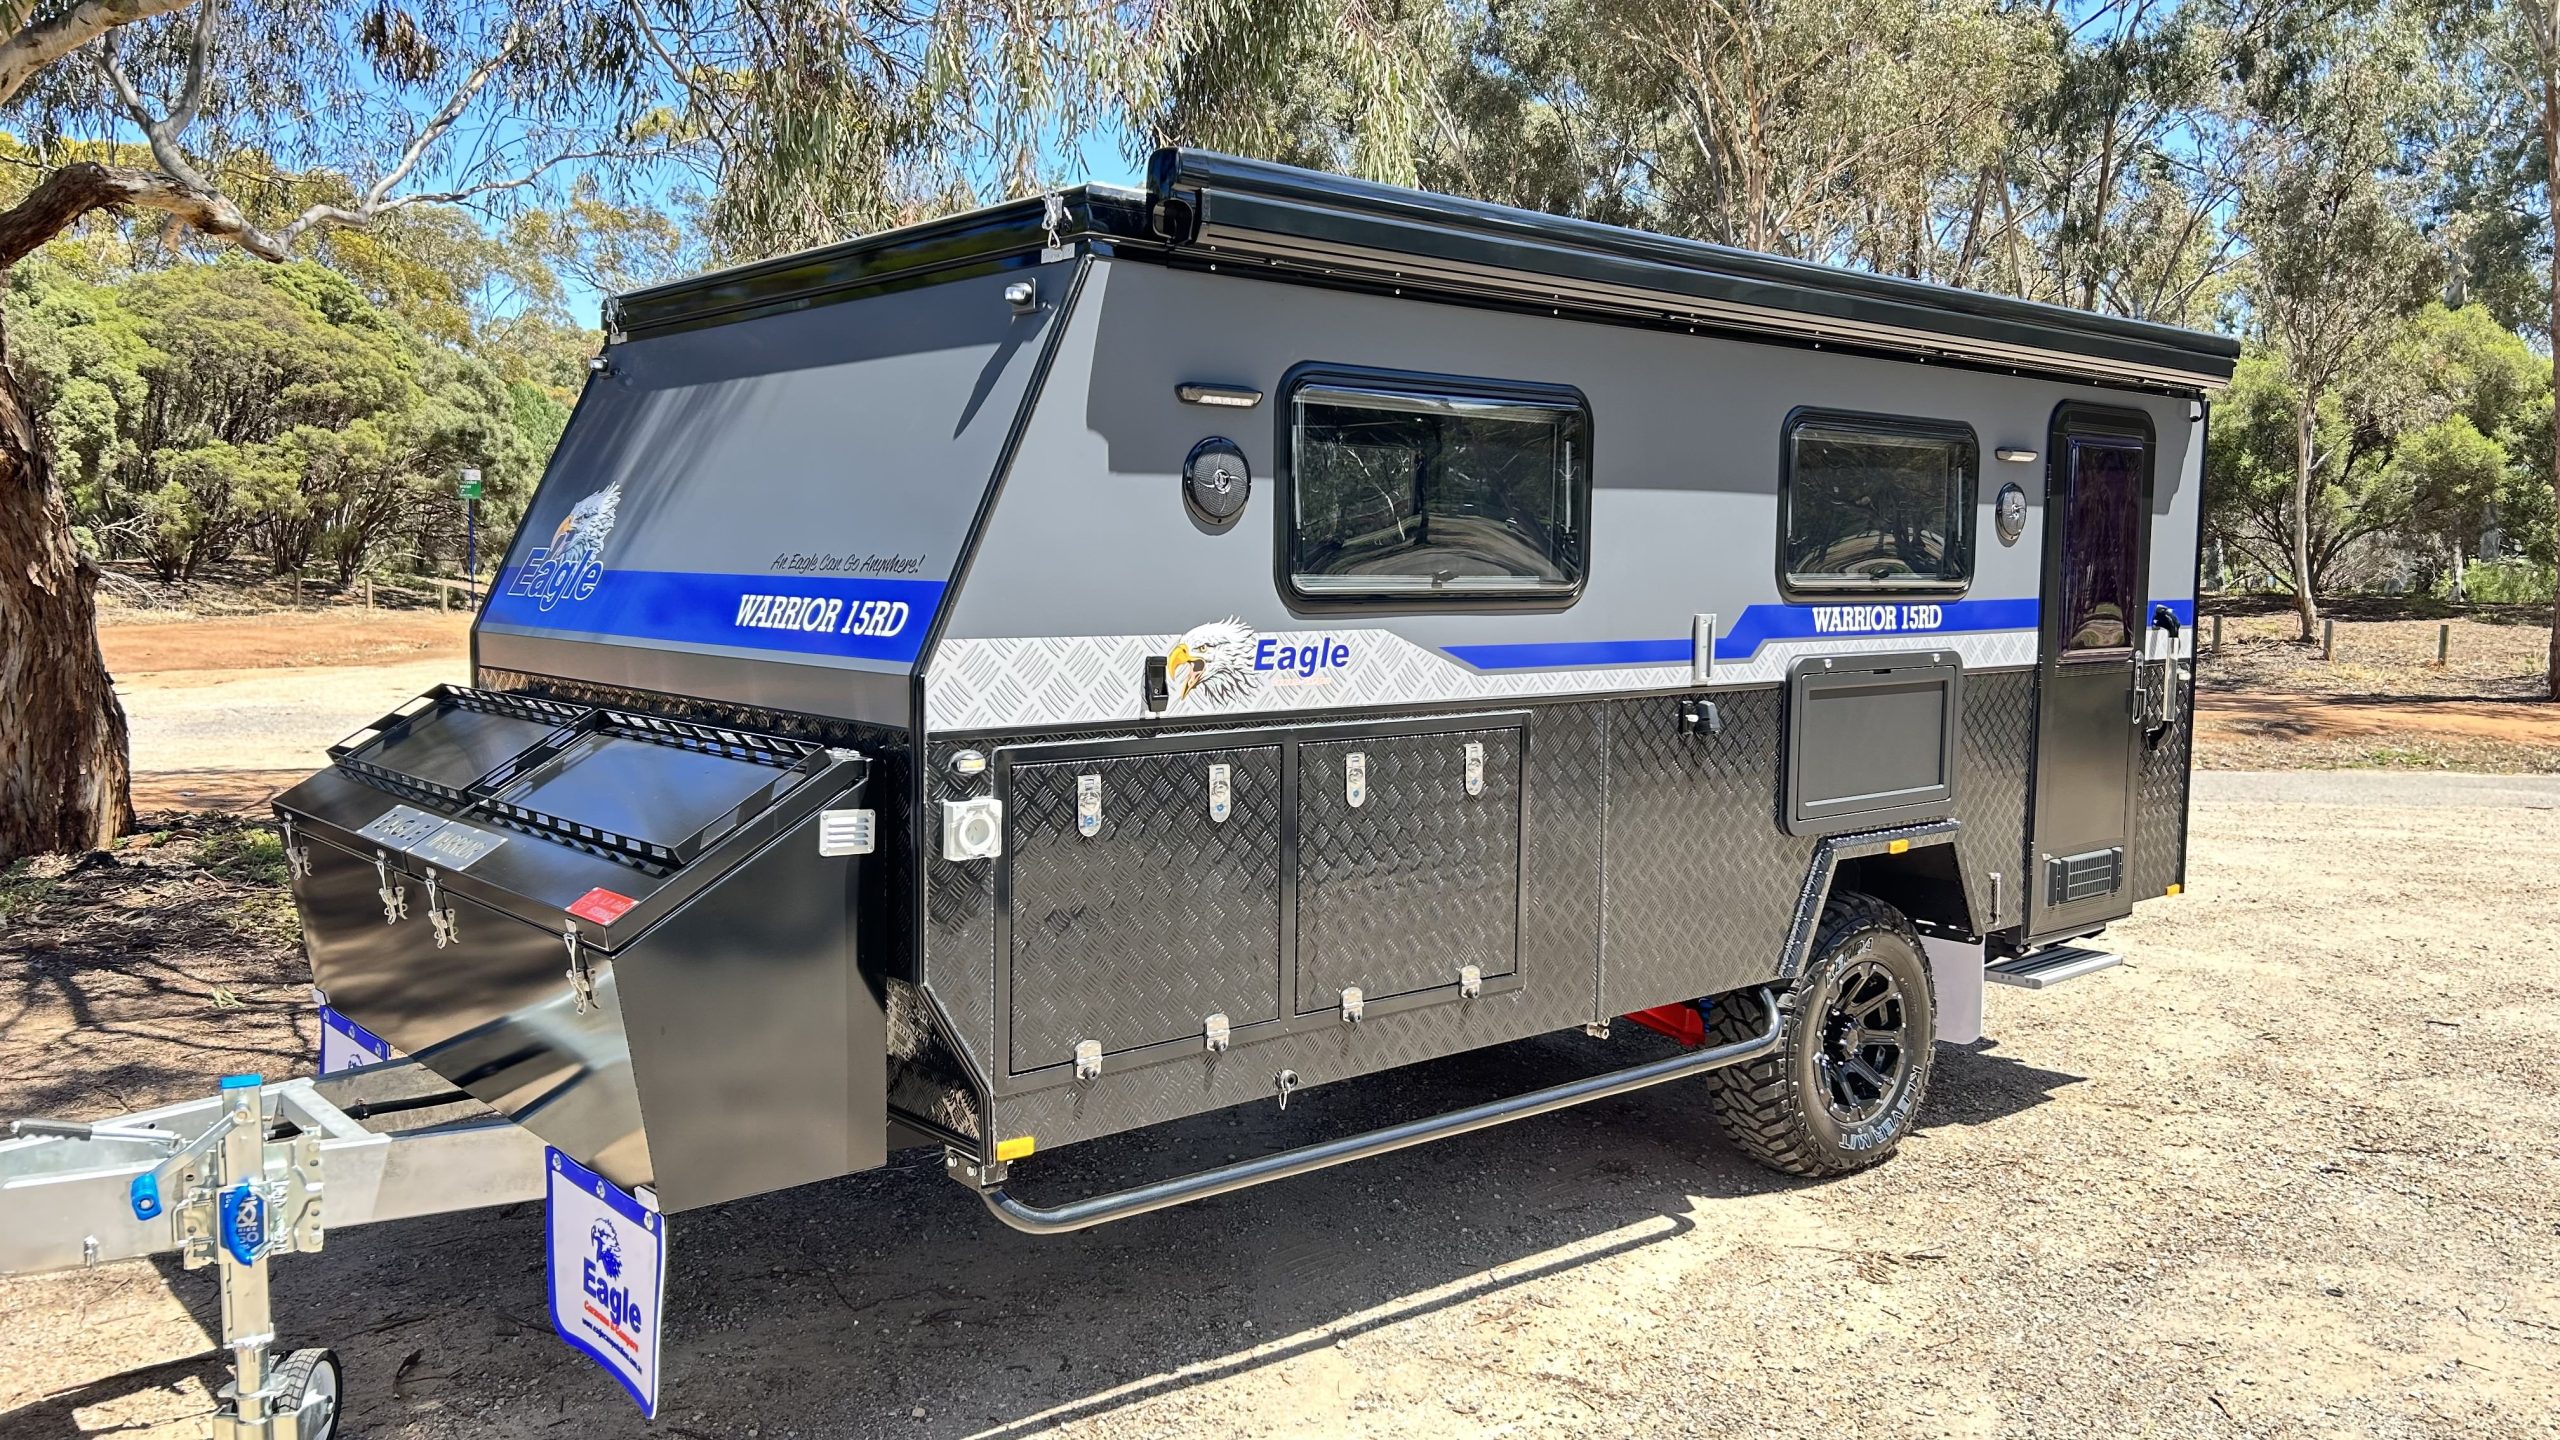 Warrior-15 RD Off Road Hybrid Caravan - Eagle Camper Trailers